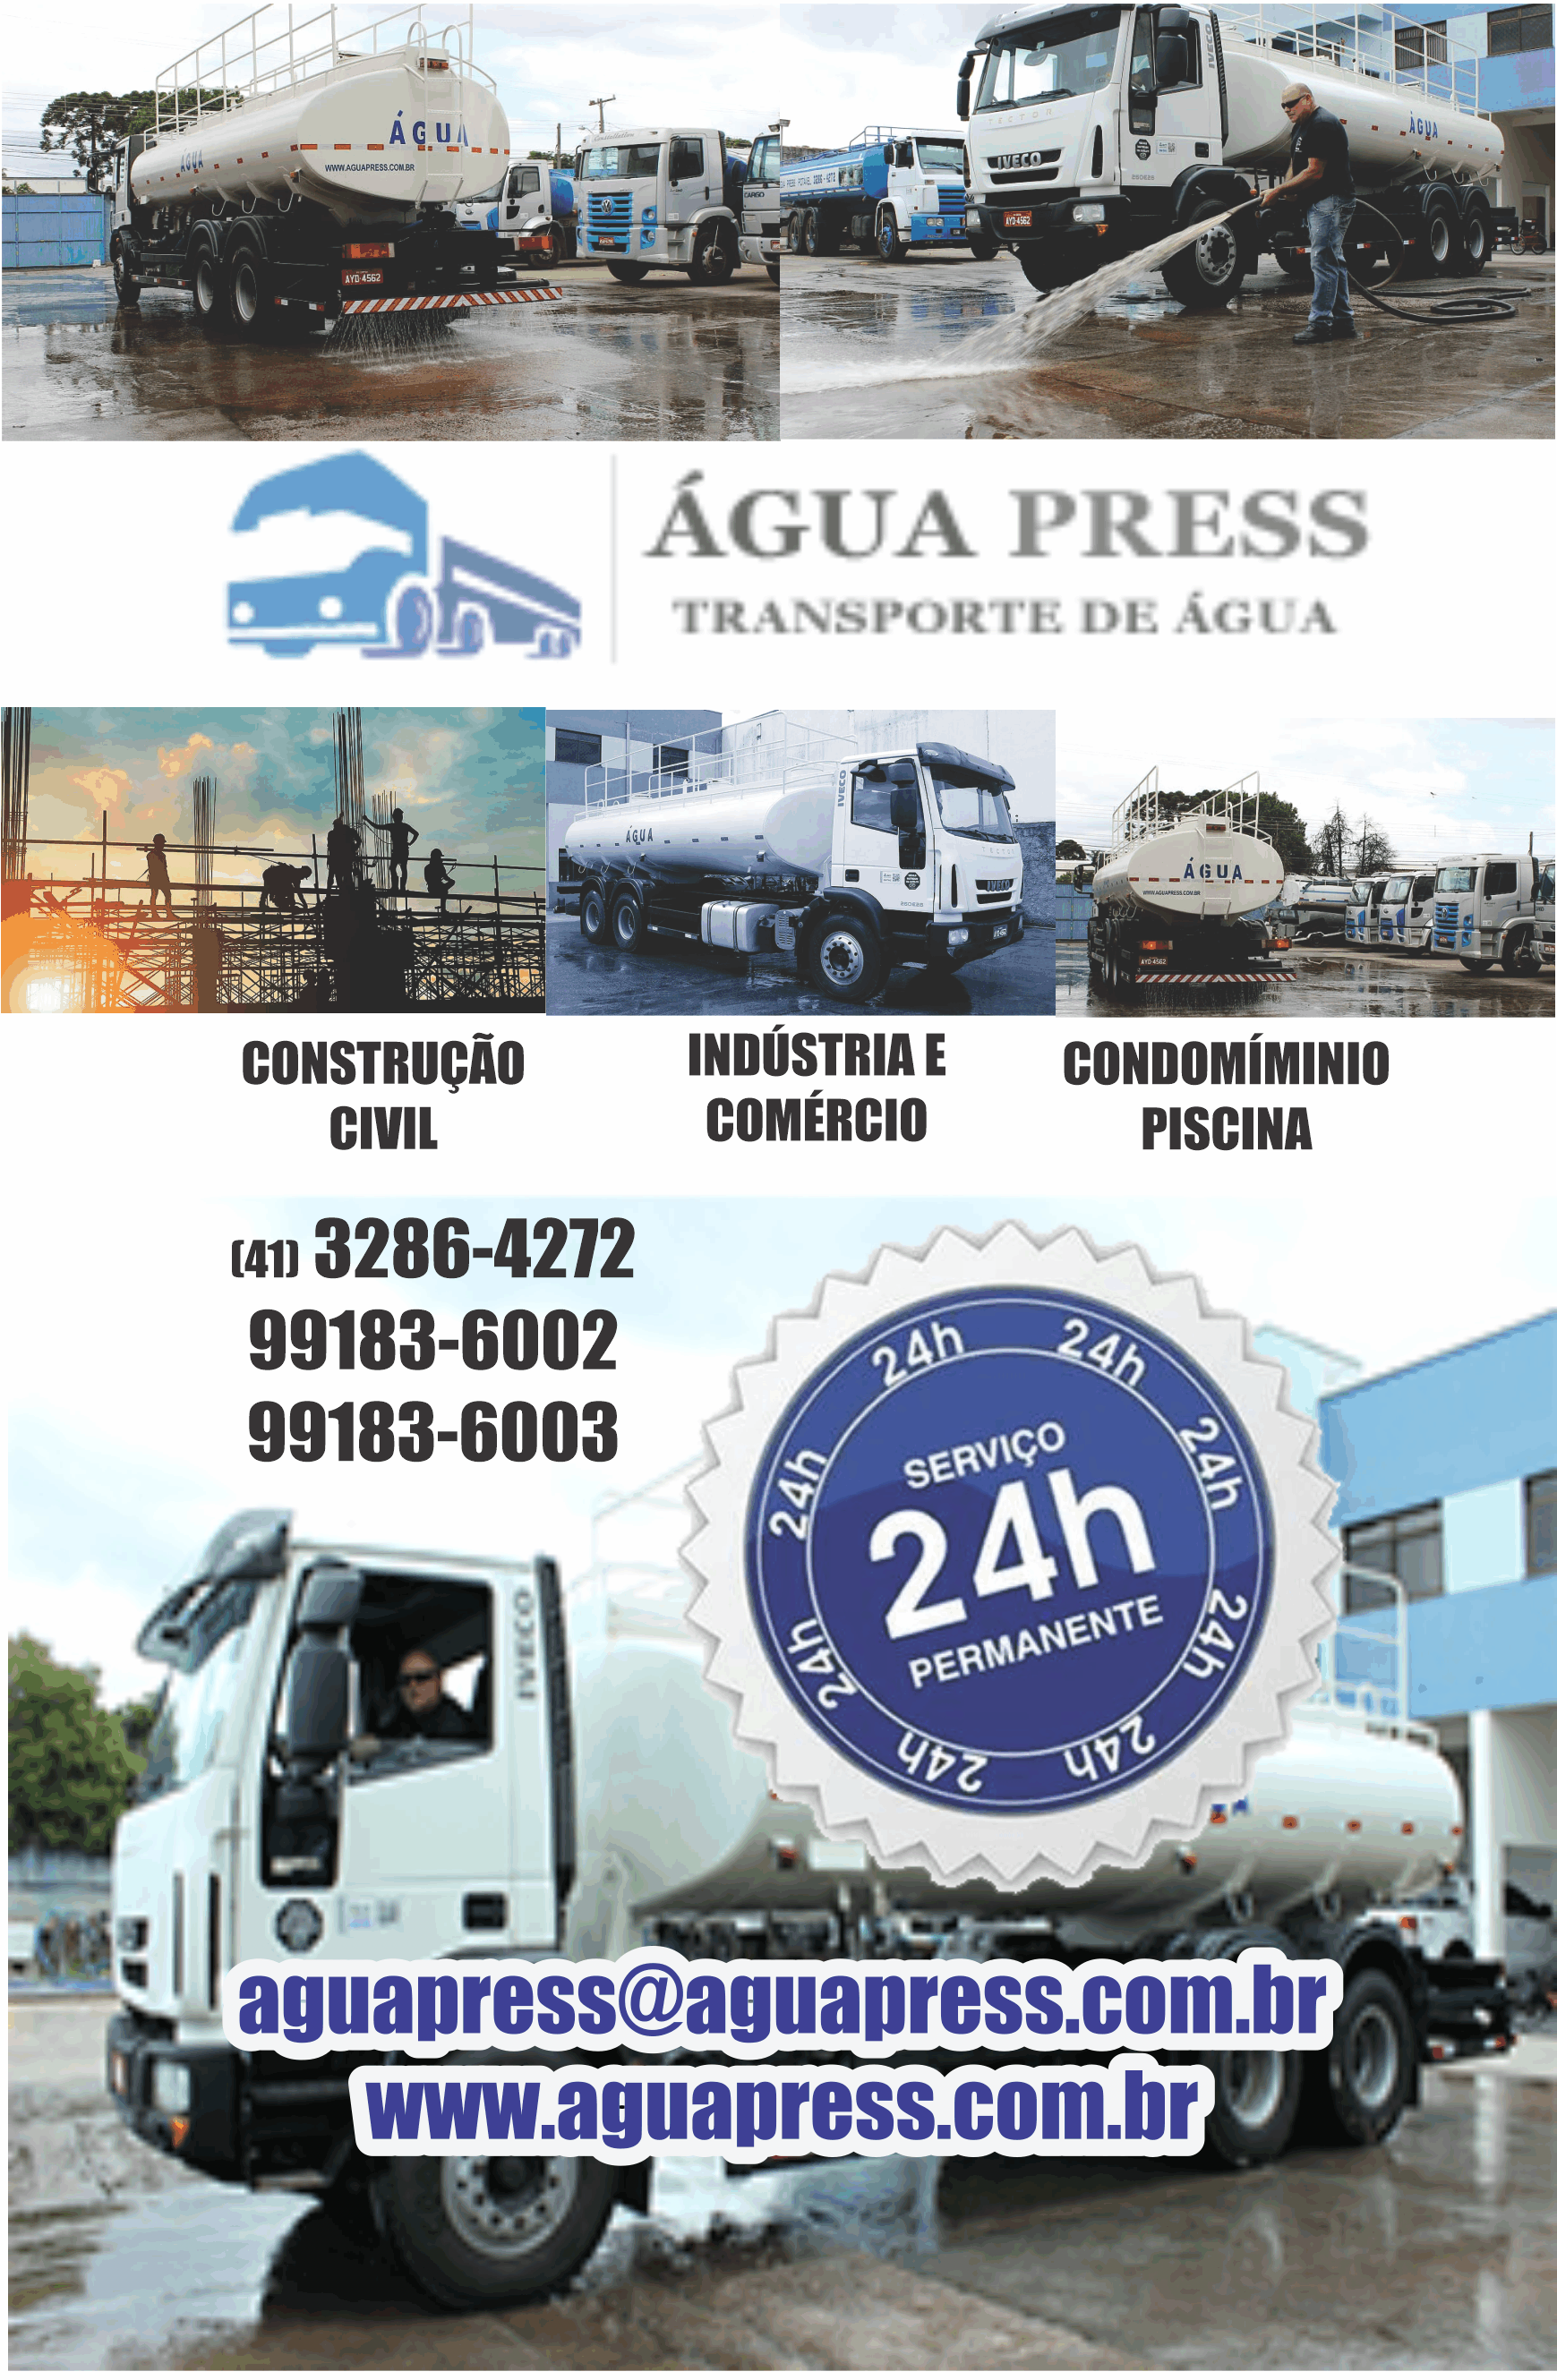 Água Press Transporte de Água      RUA DIOGO MUGIATTI, 1030, CURITIBA - PR  Fones: (41)99183-6002 / (41) 99183-6003